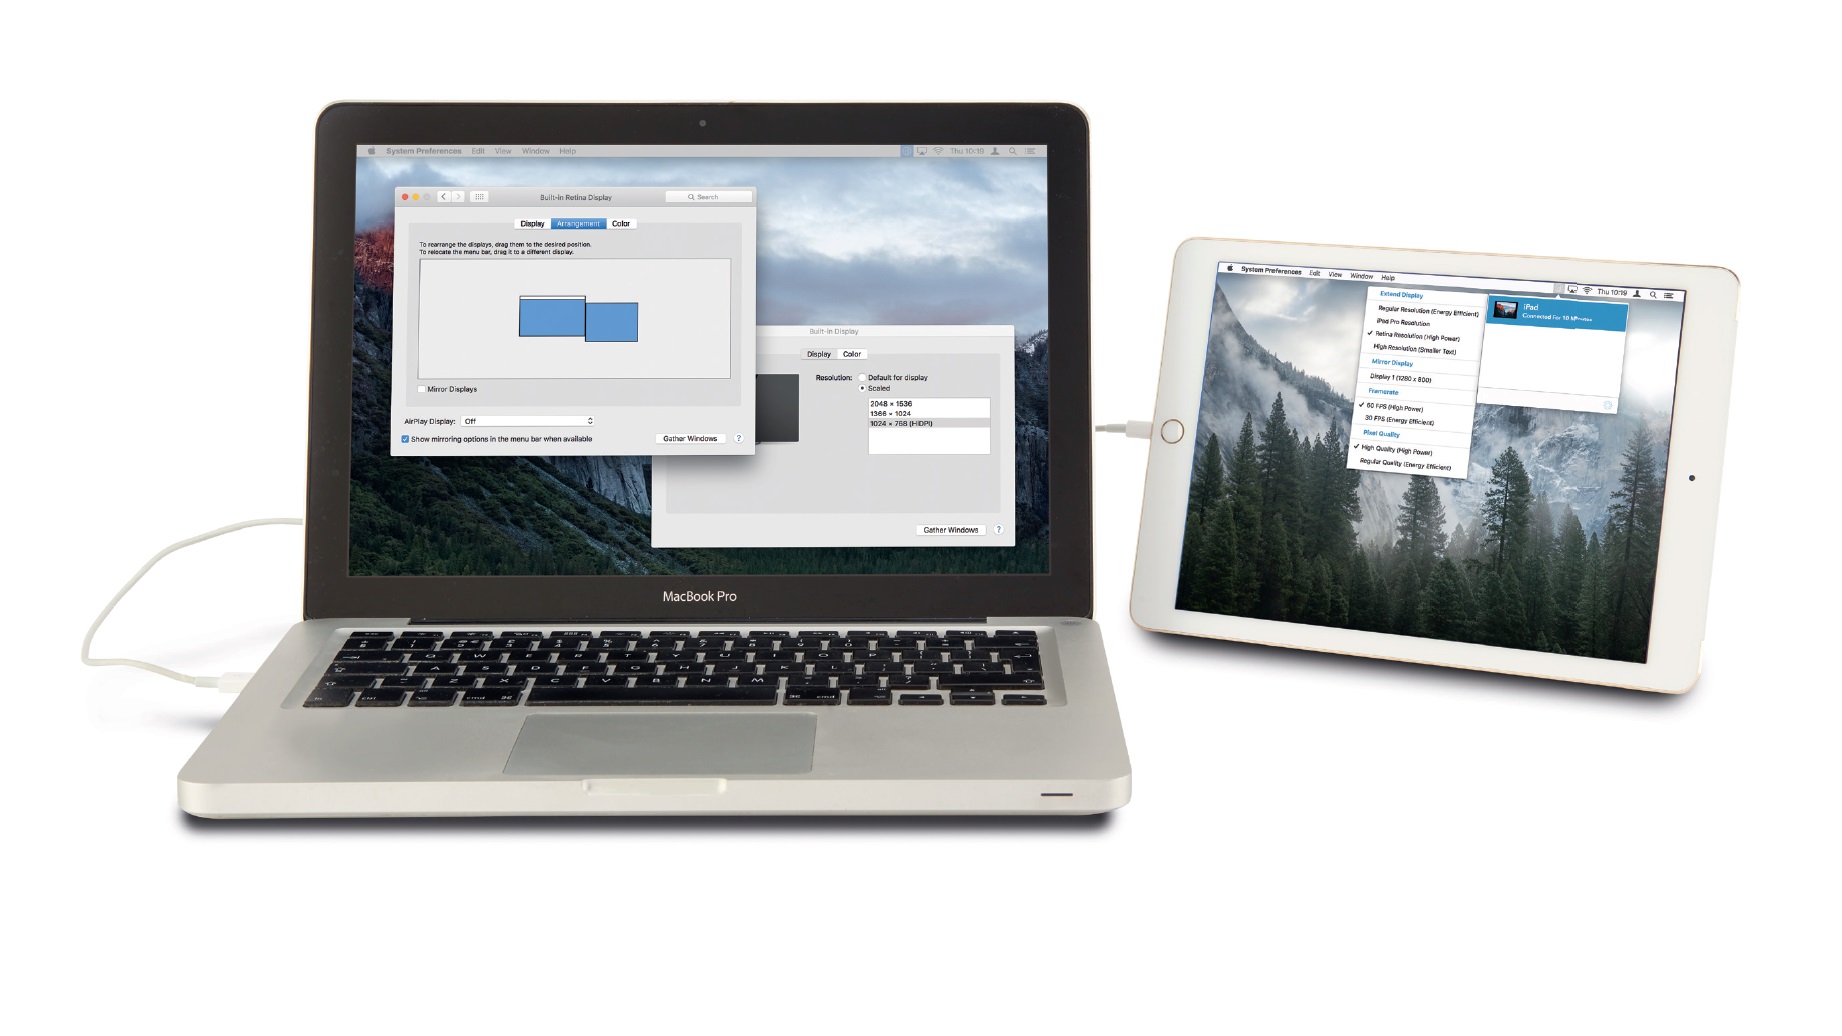 how do i use chromecast with mac powerbook pro